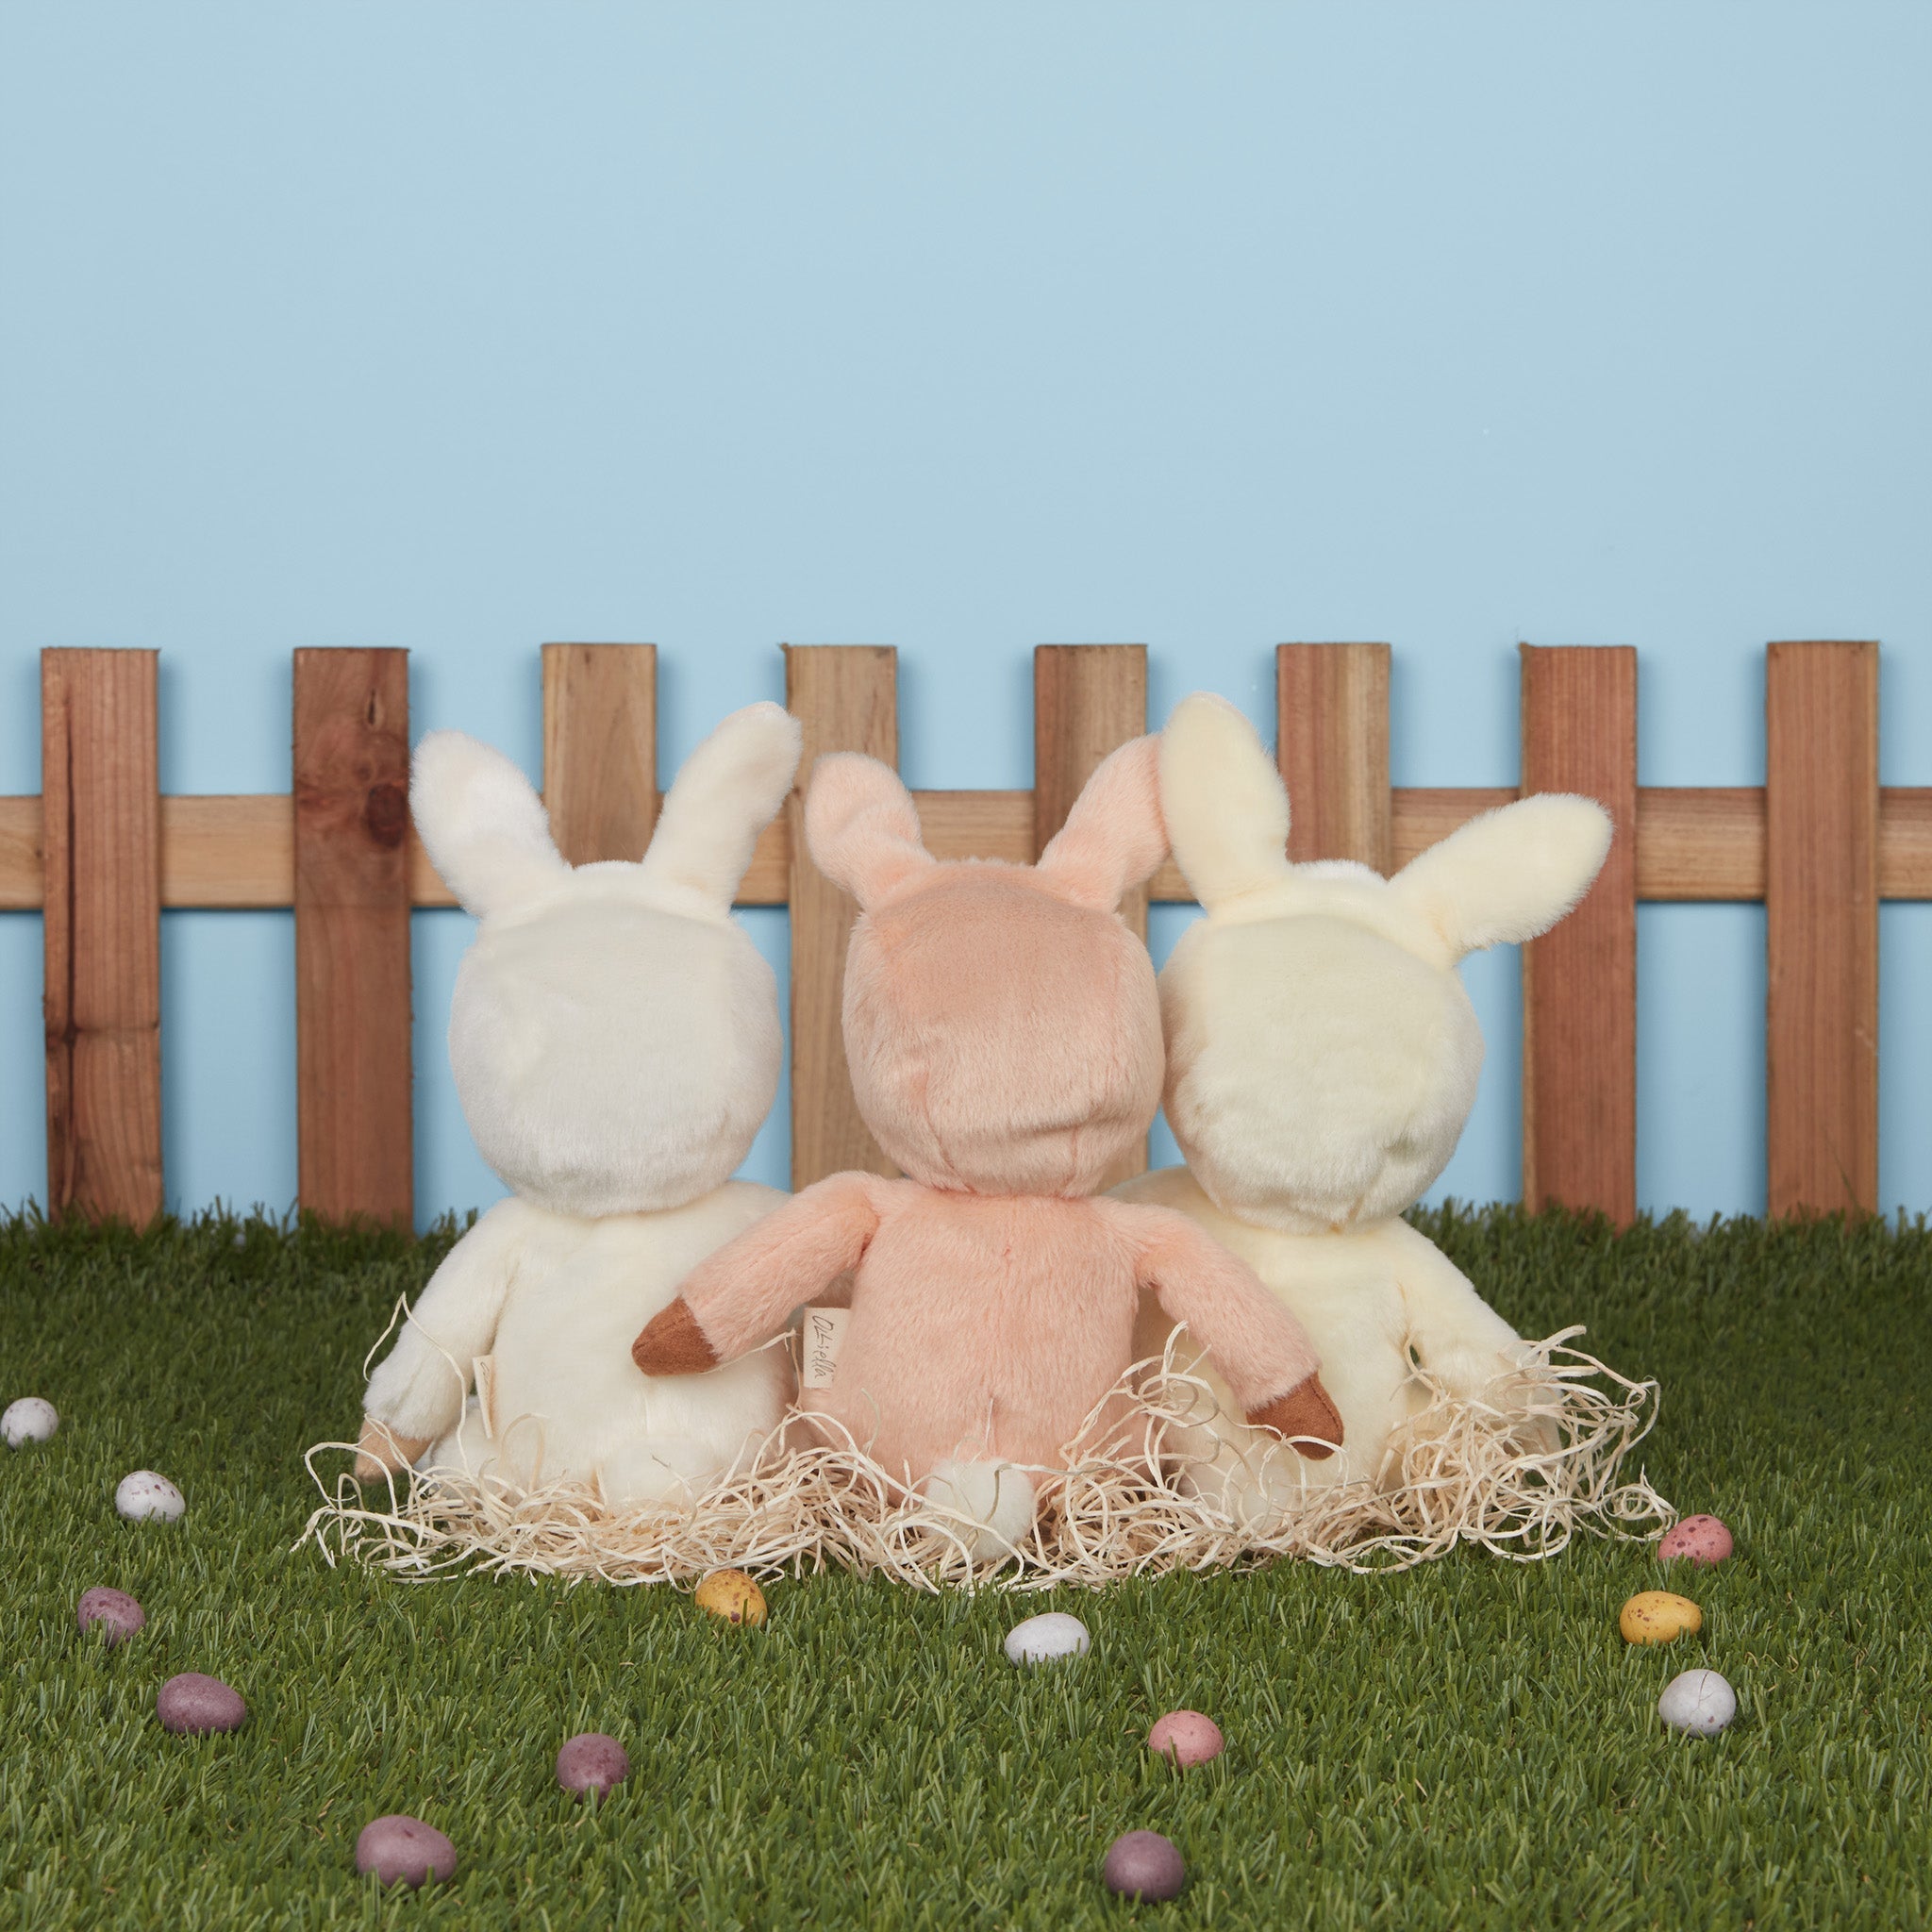 Dinky Dinkums - Fluffle Family - Bobbin Bunny - Ivory